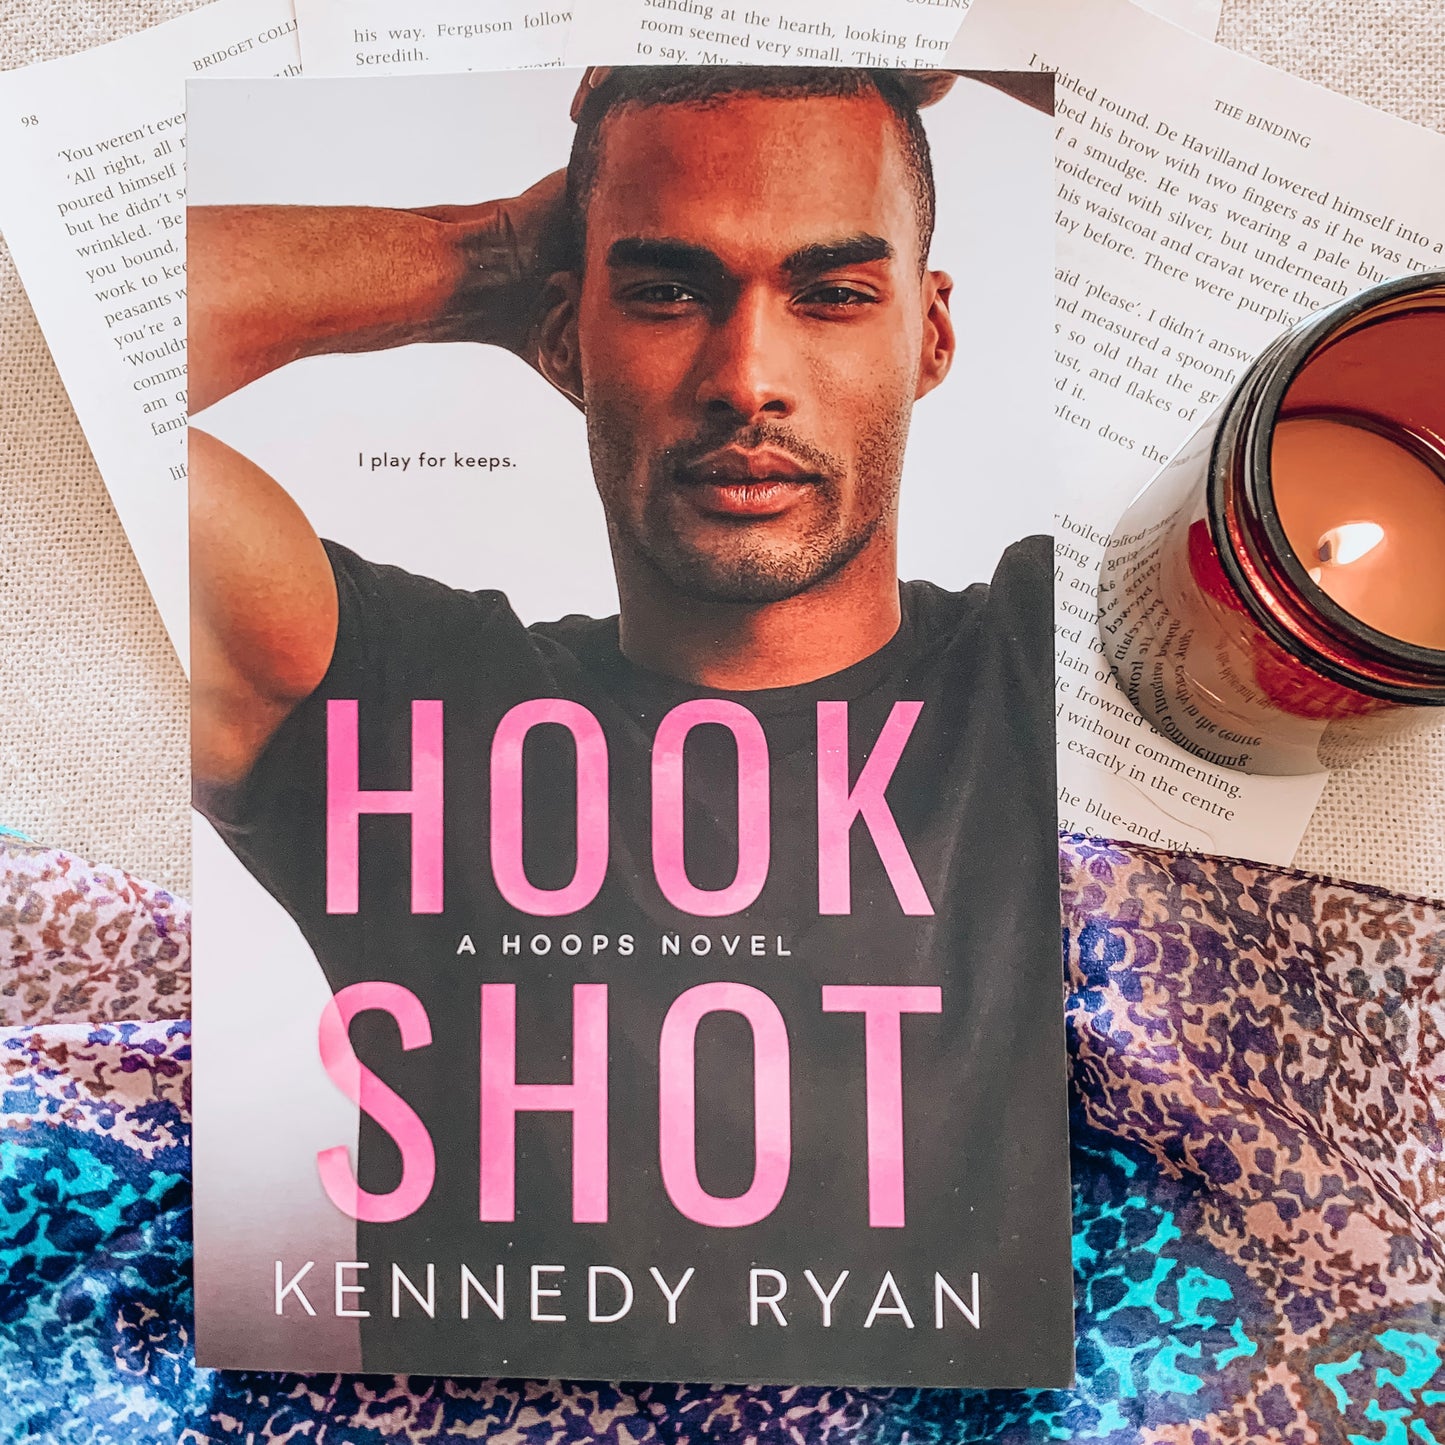 A Hoops novel series by Kennedy Ryan